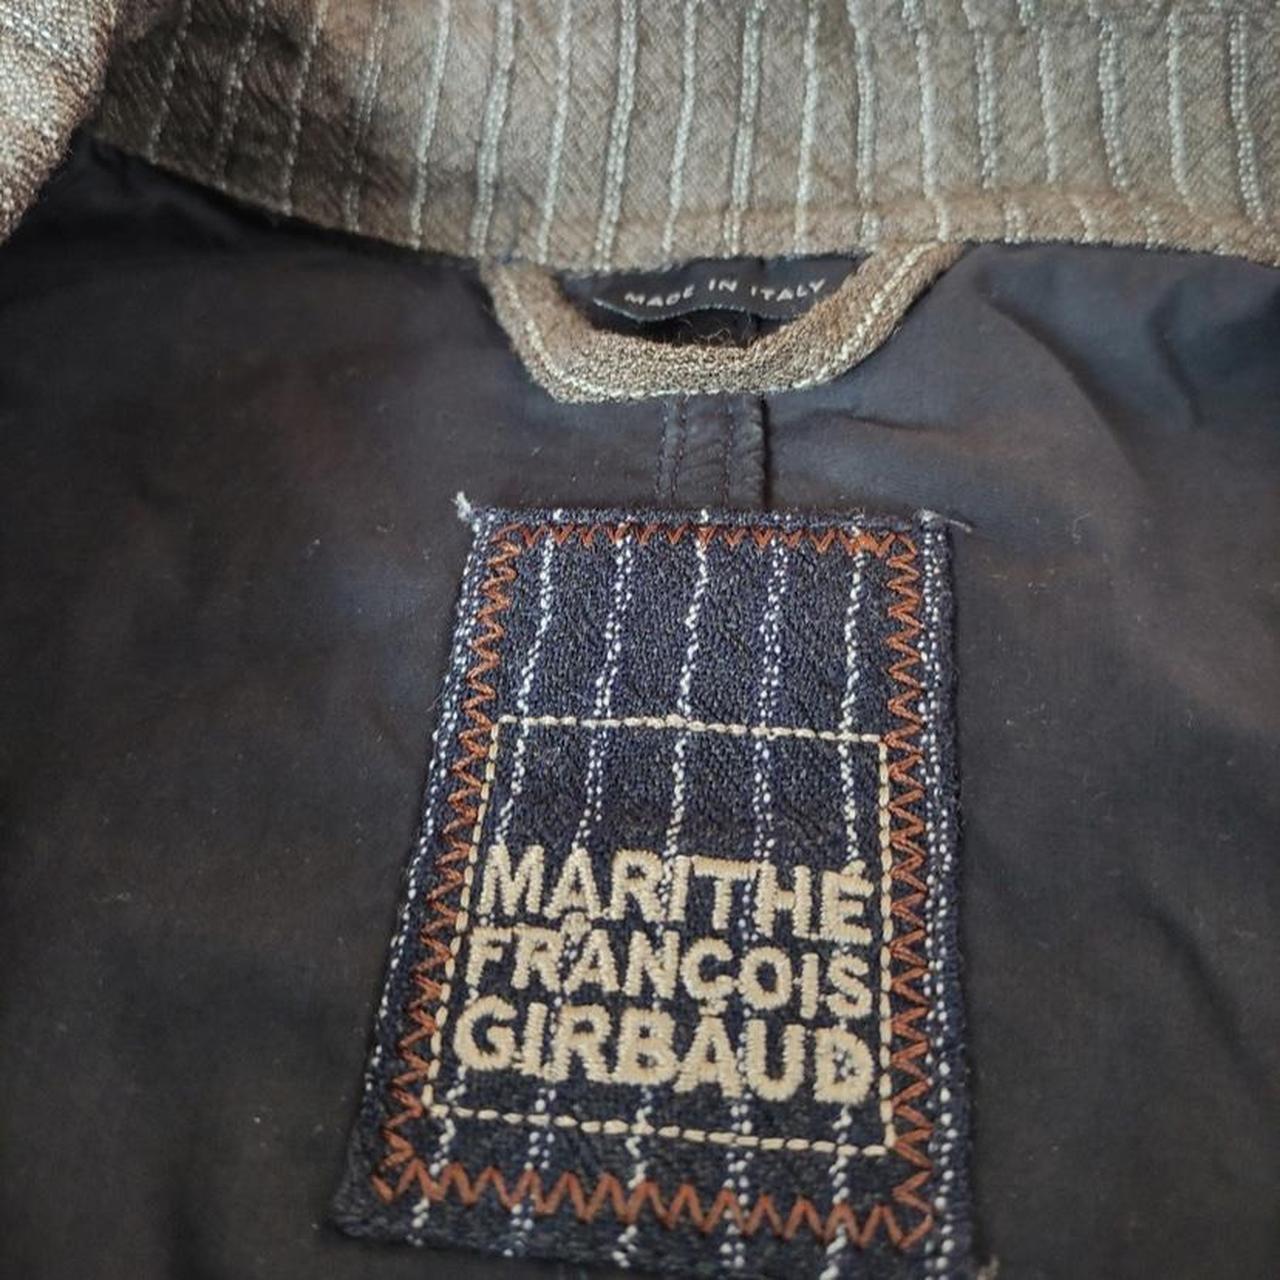 marithe francois girbaud jacket #archive... - Depop